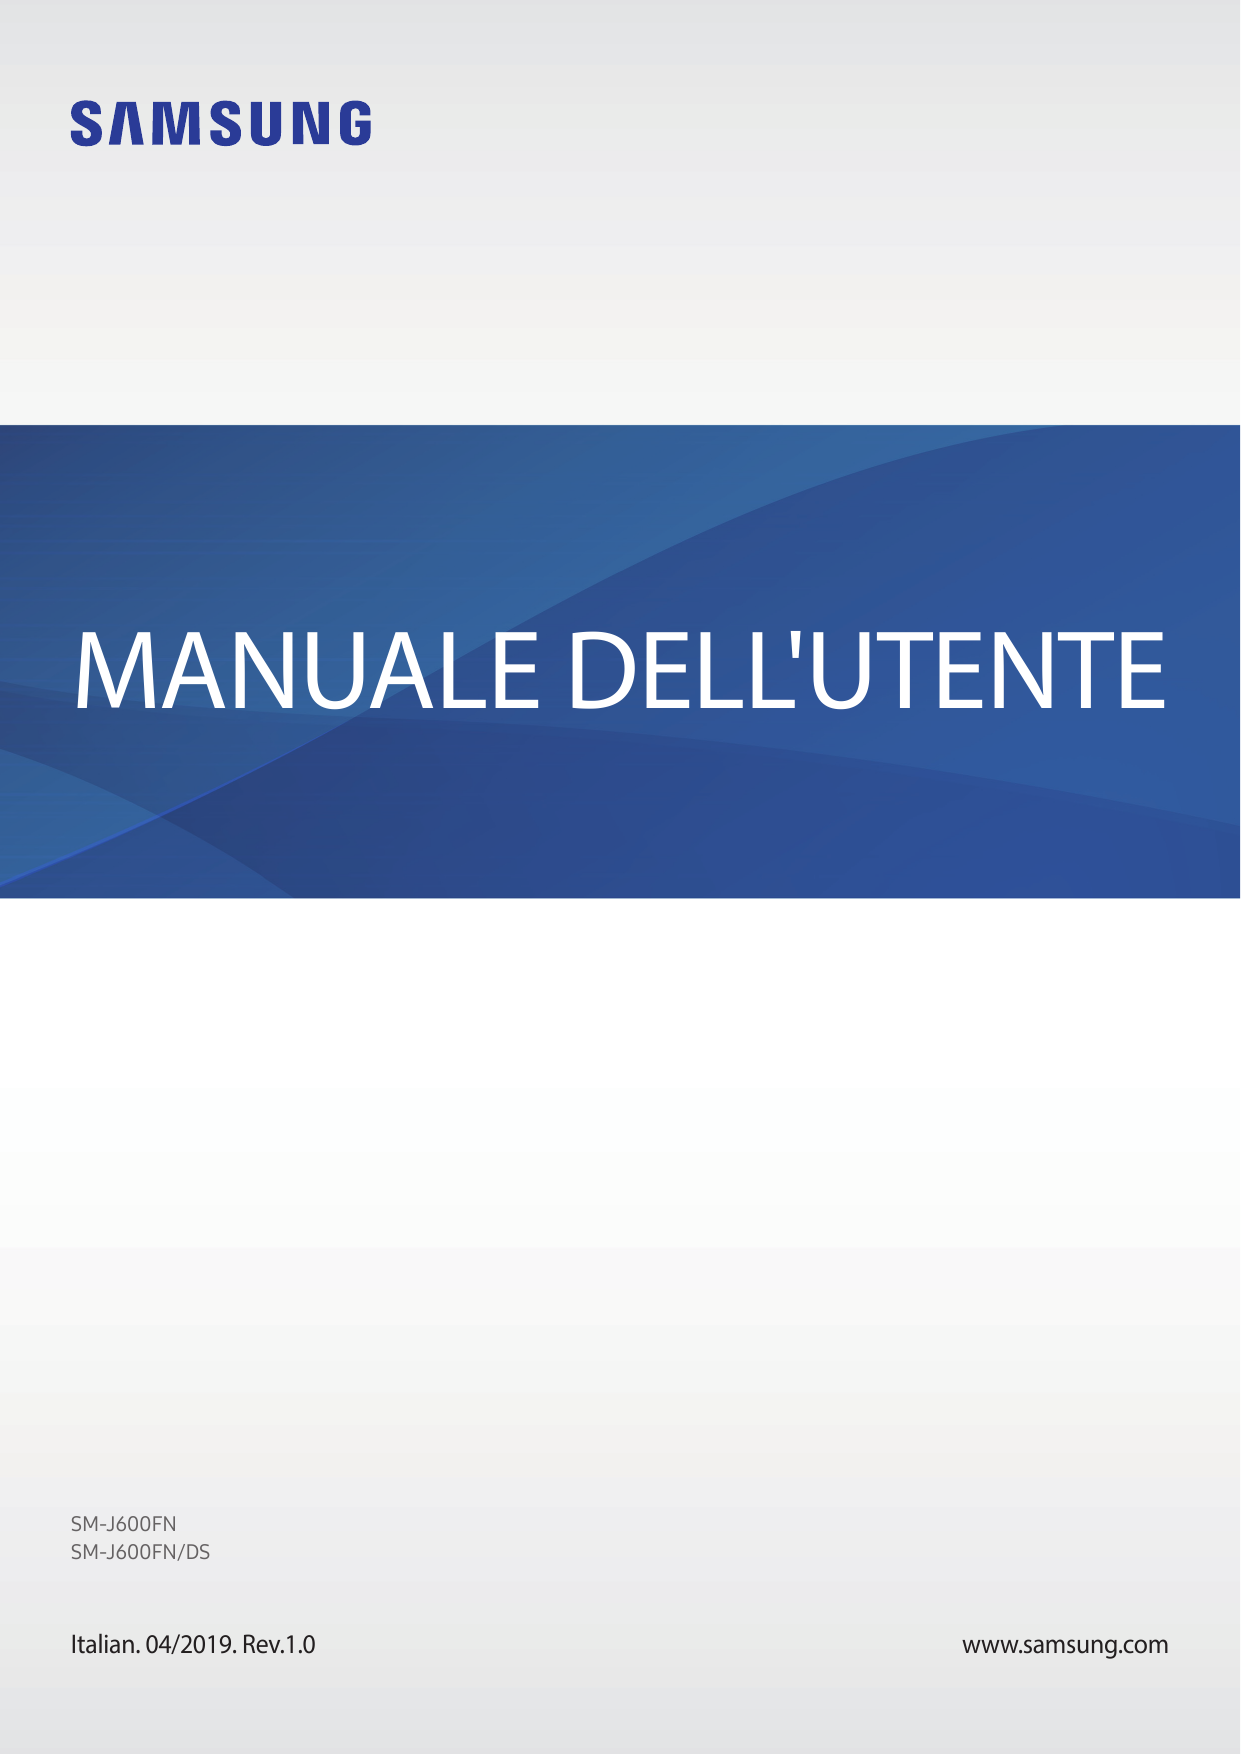 MANUALE DELL'UTENTESM-J600FNSM-J600FN/DSItalian. 04/2019. Rev.1.0www.samsung.com